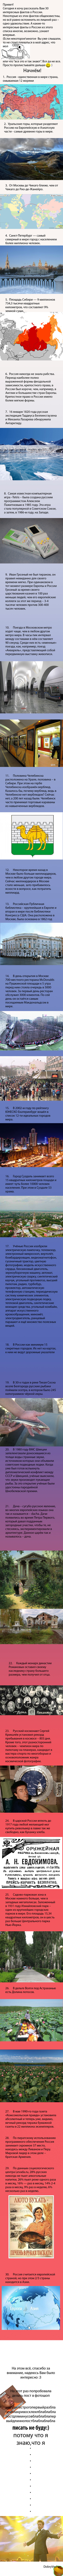 http://s5.pikabu.ru/post_img/2014/11/26/8/1417004136_404883182.jpg